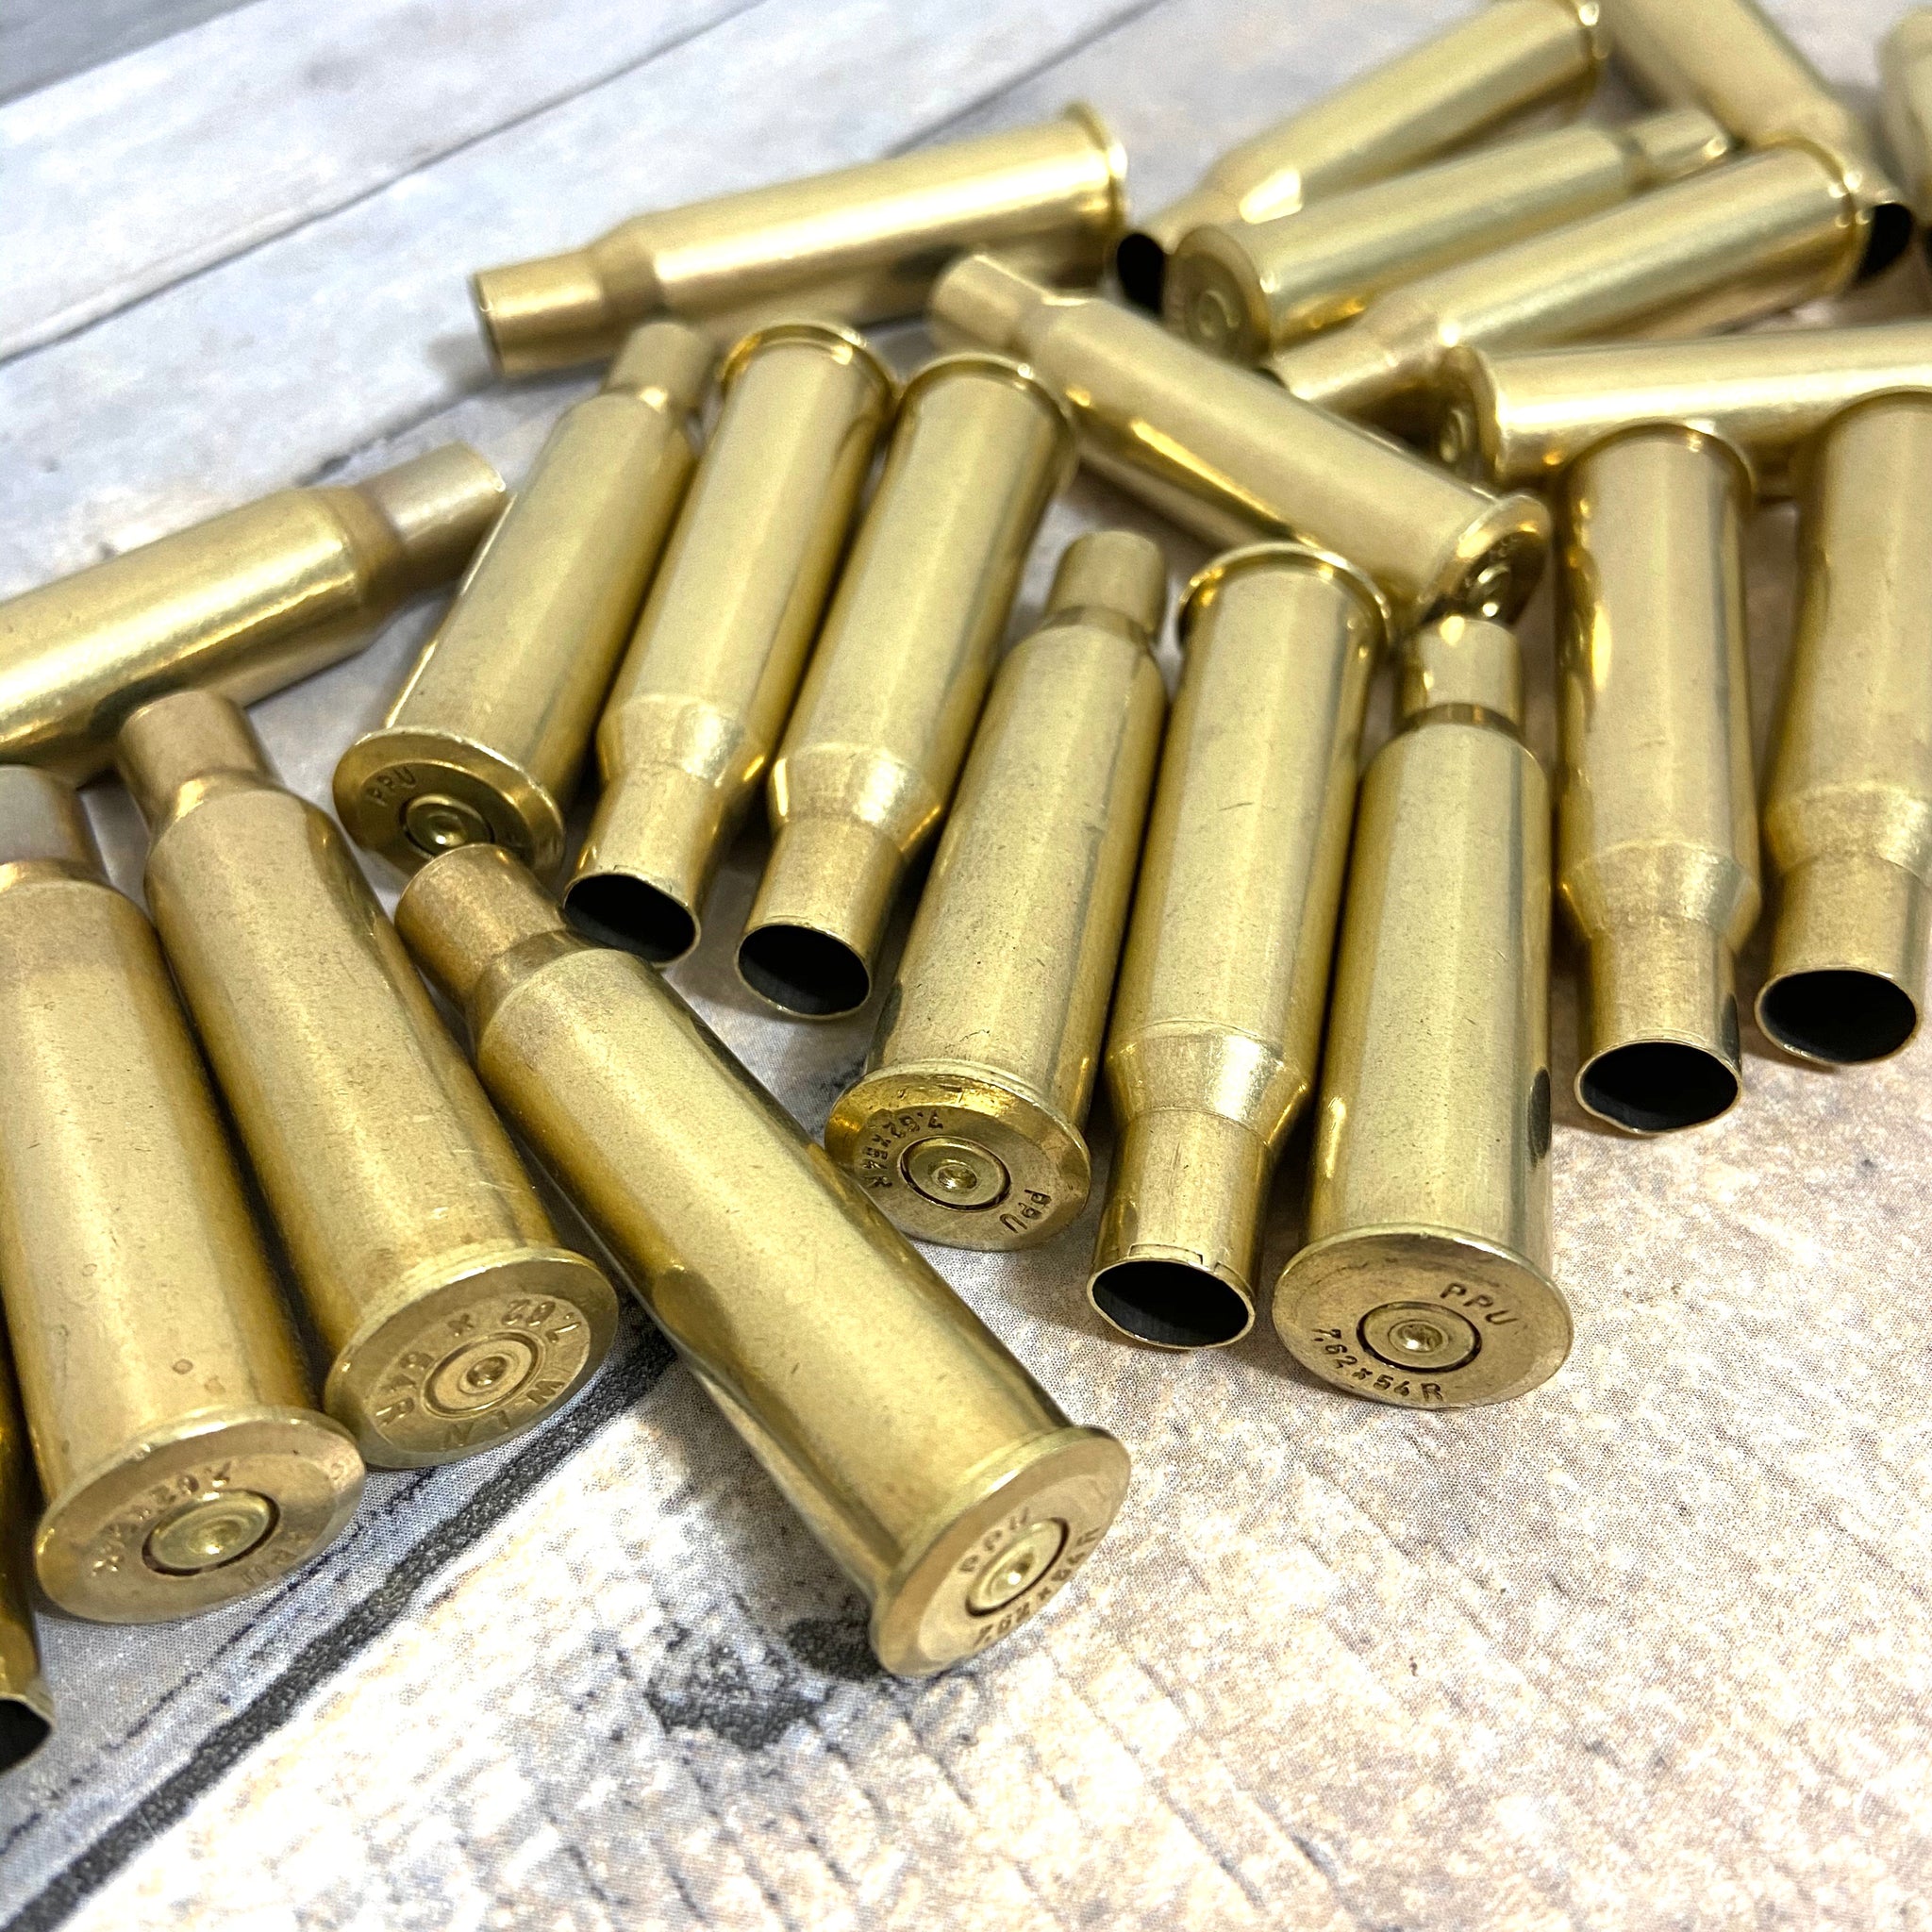 7.62x54R Empty Spent Brass Rifle Bullet Casings Used Shells